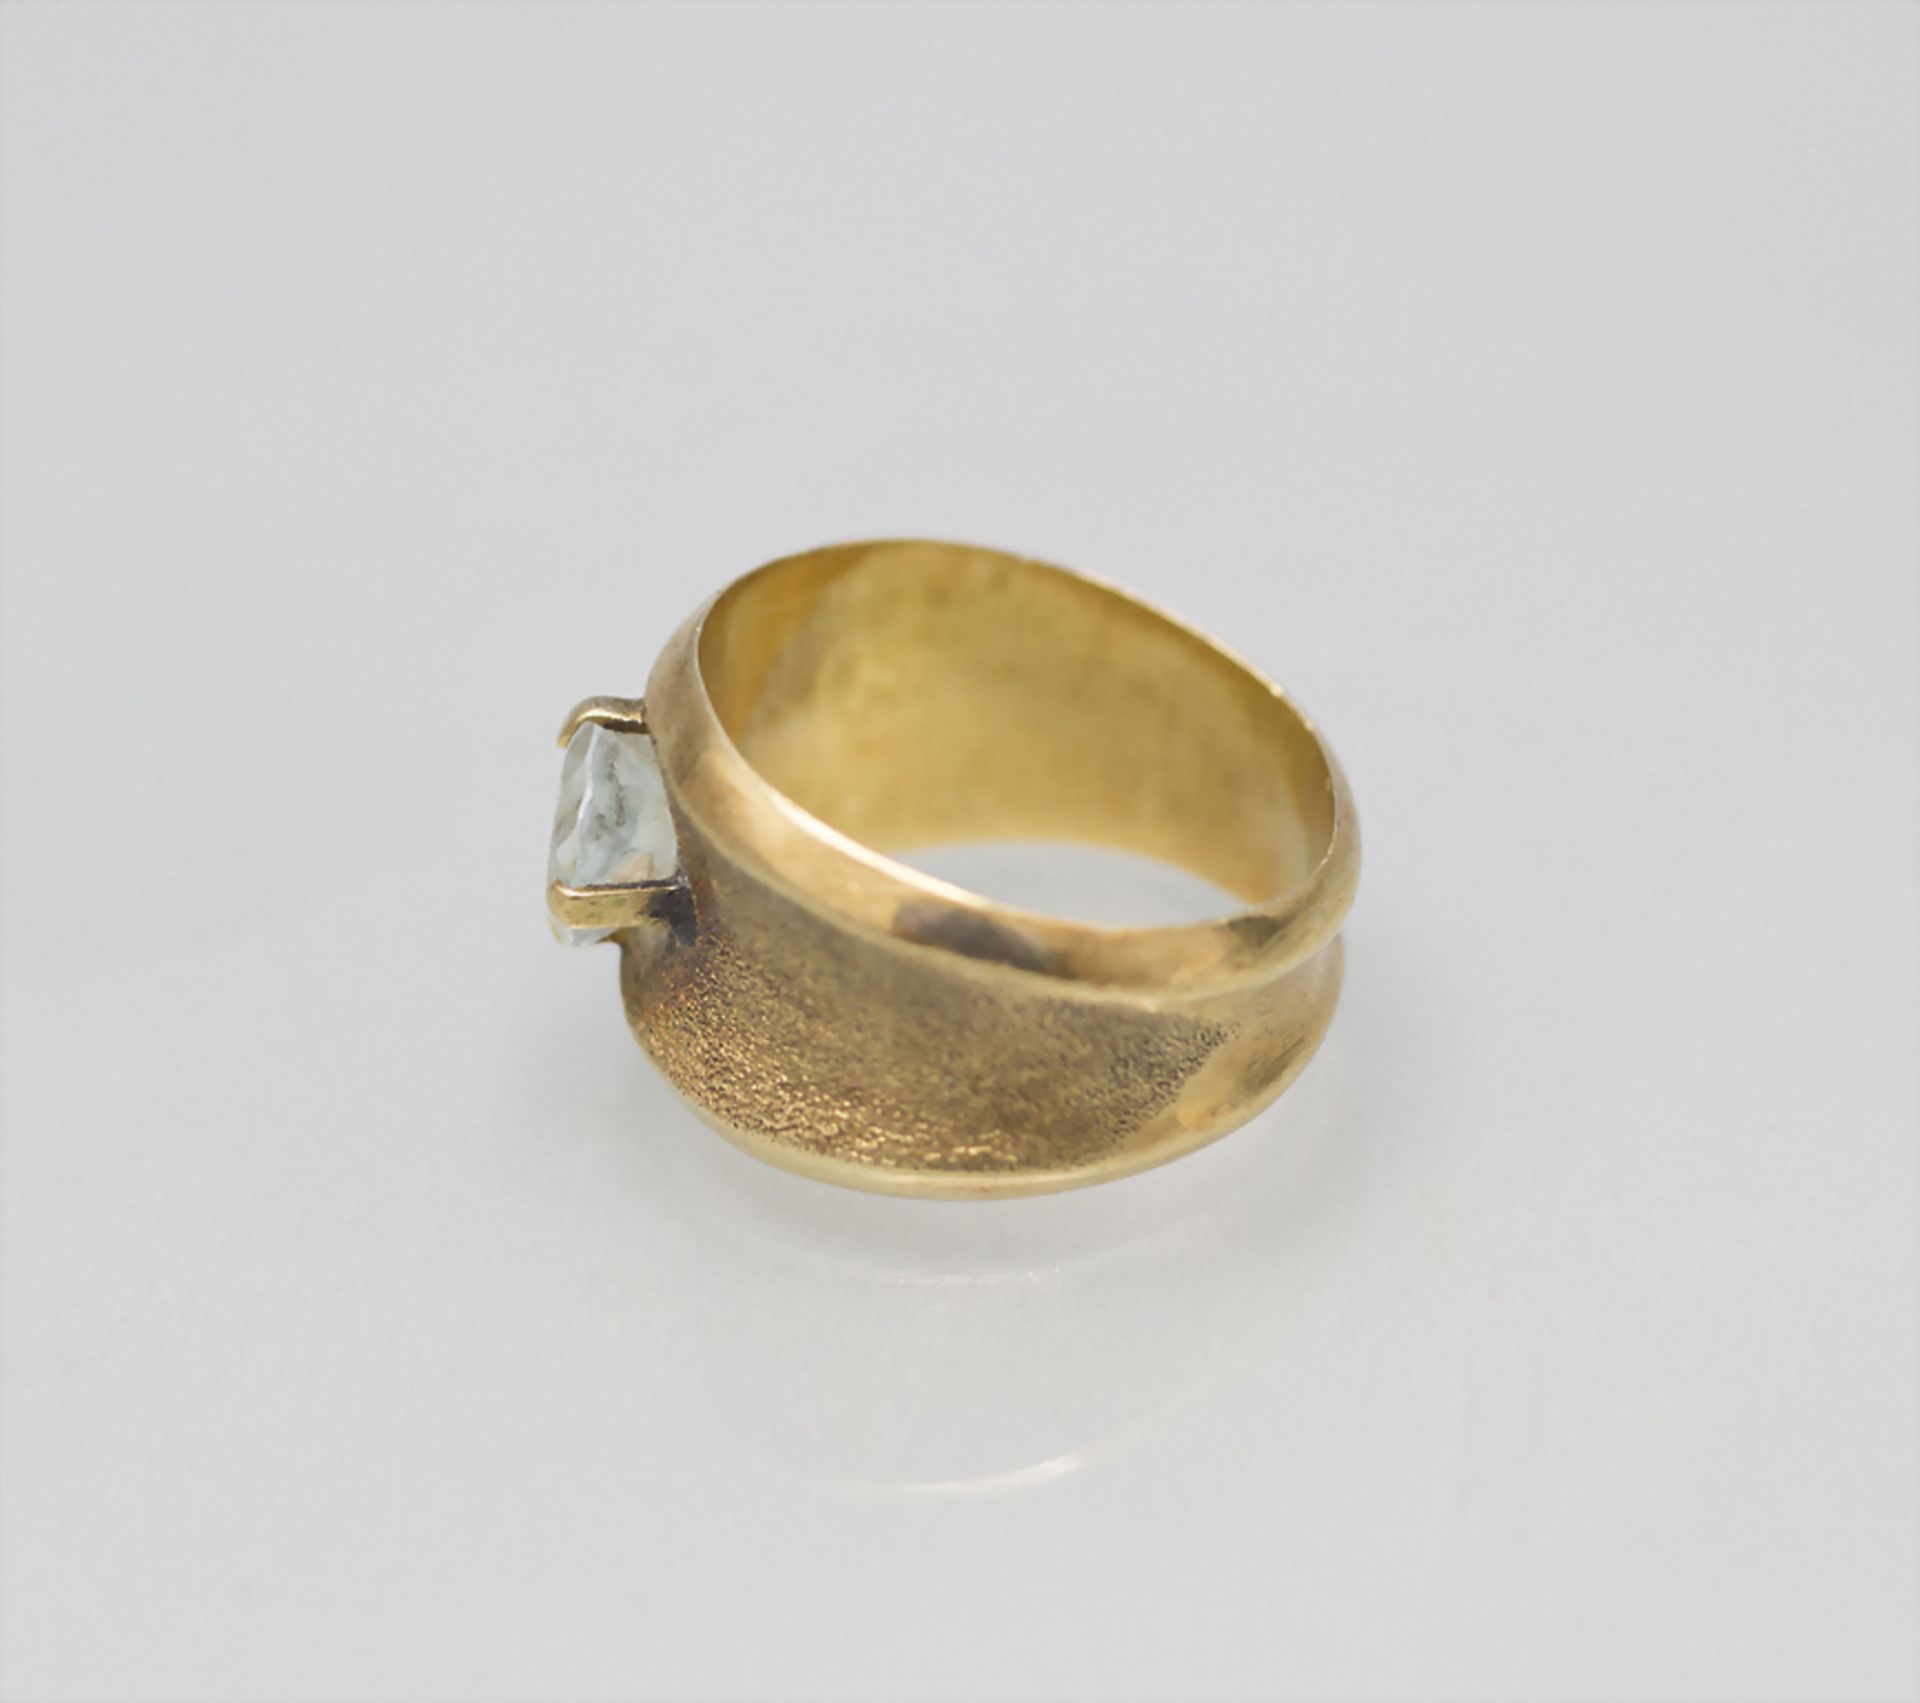 Damenring mit Aquamarin / A ladies 18 ct gold ring with an aquamarine - Image 2 of 3